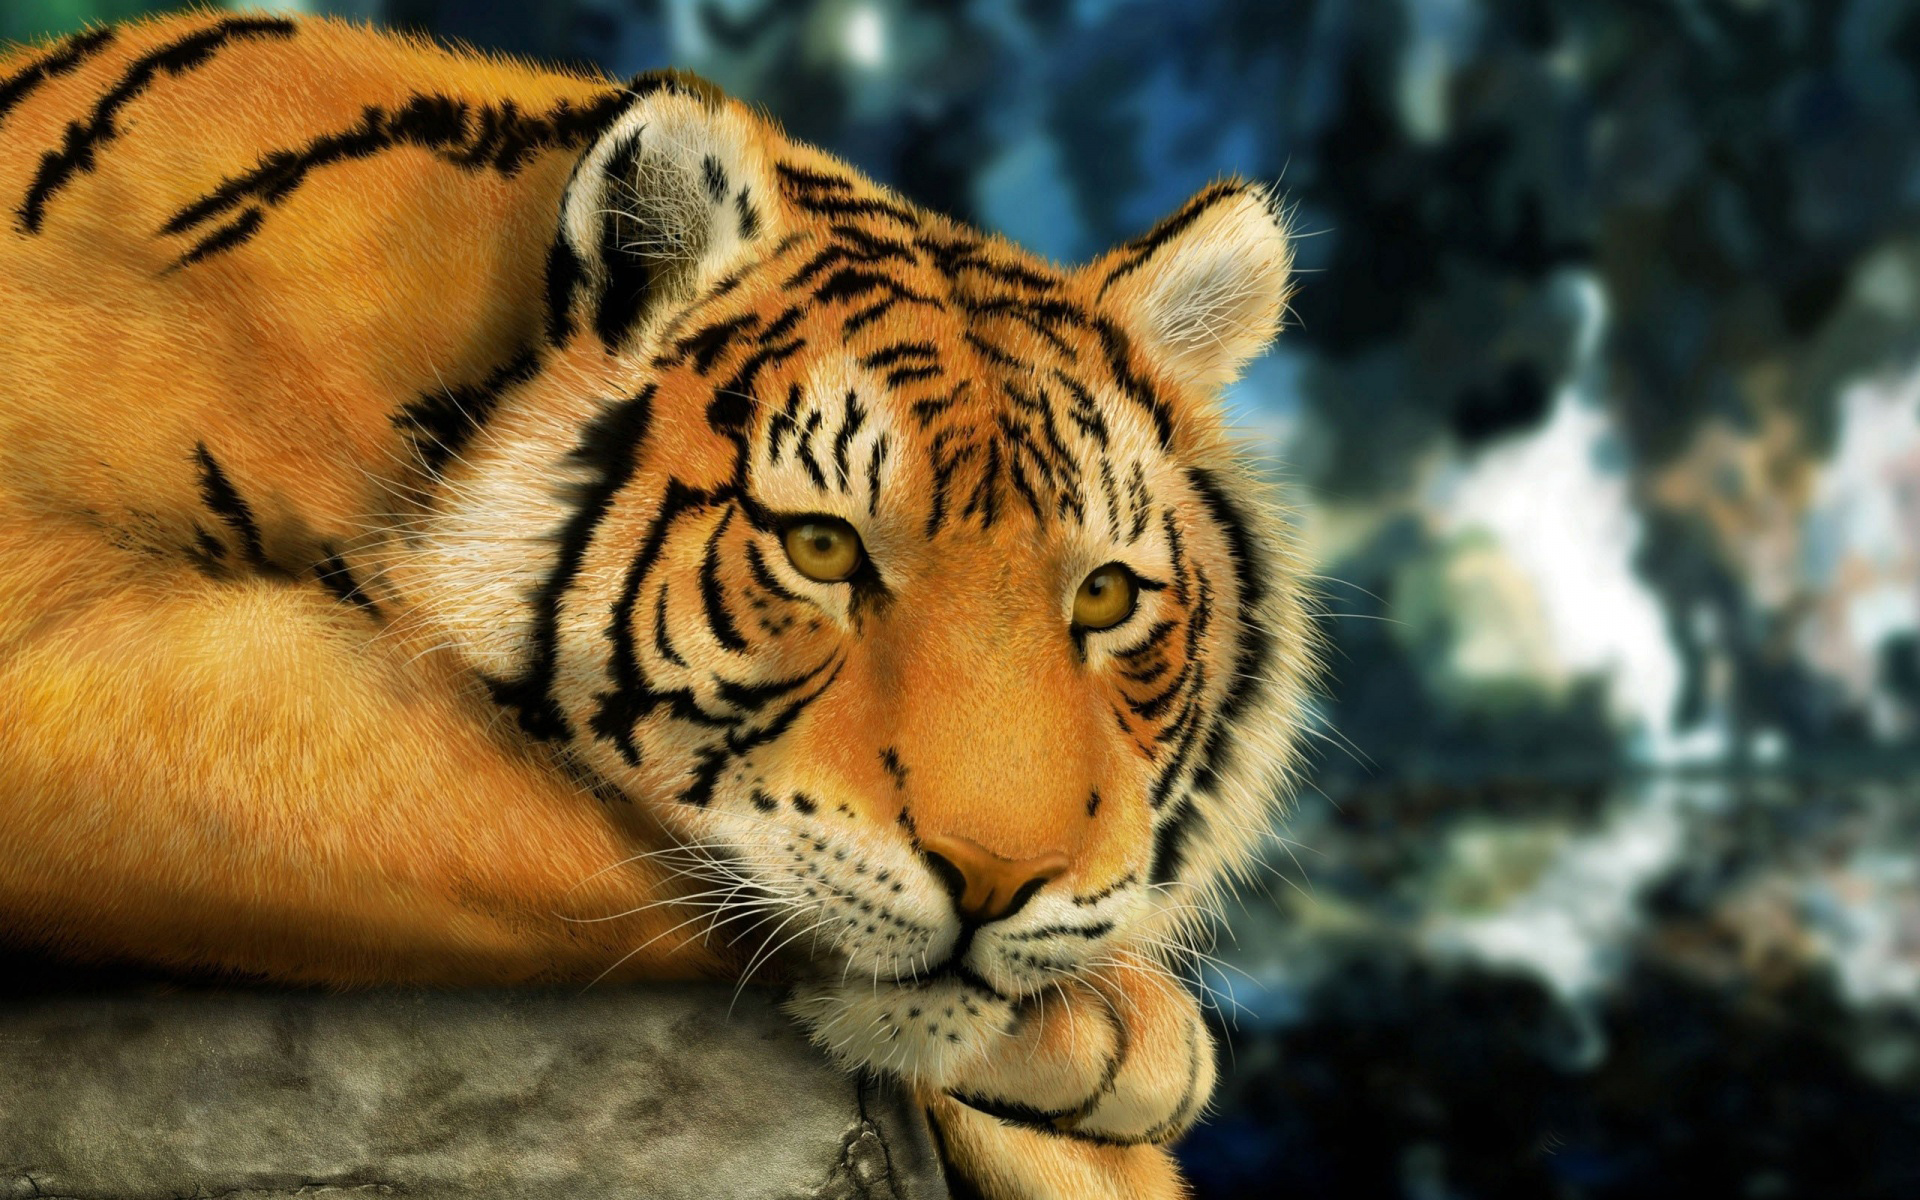 Tiger Painting Puter Desktop Wallpaper Pictures Image